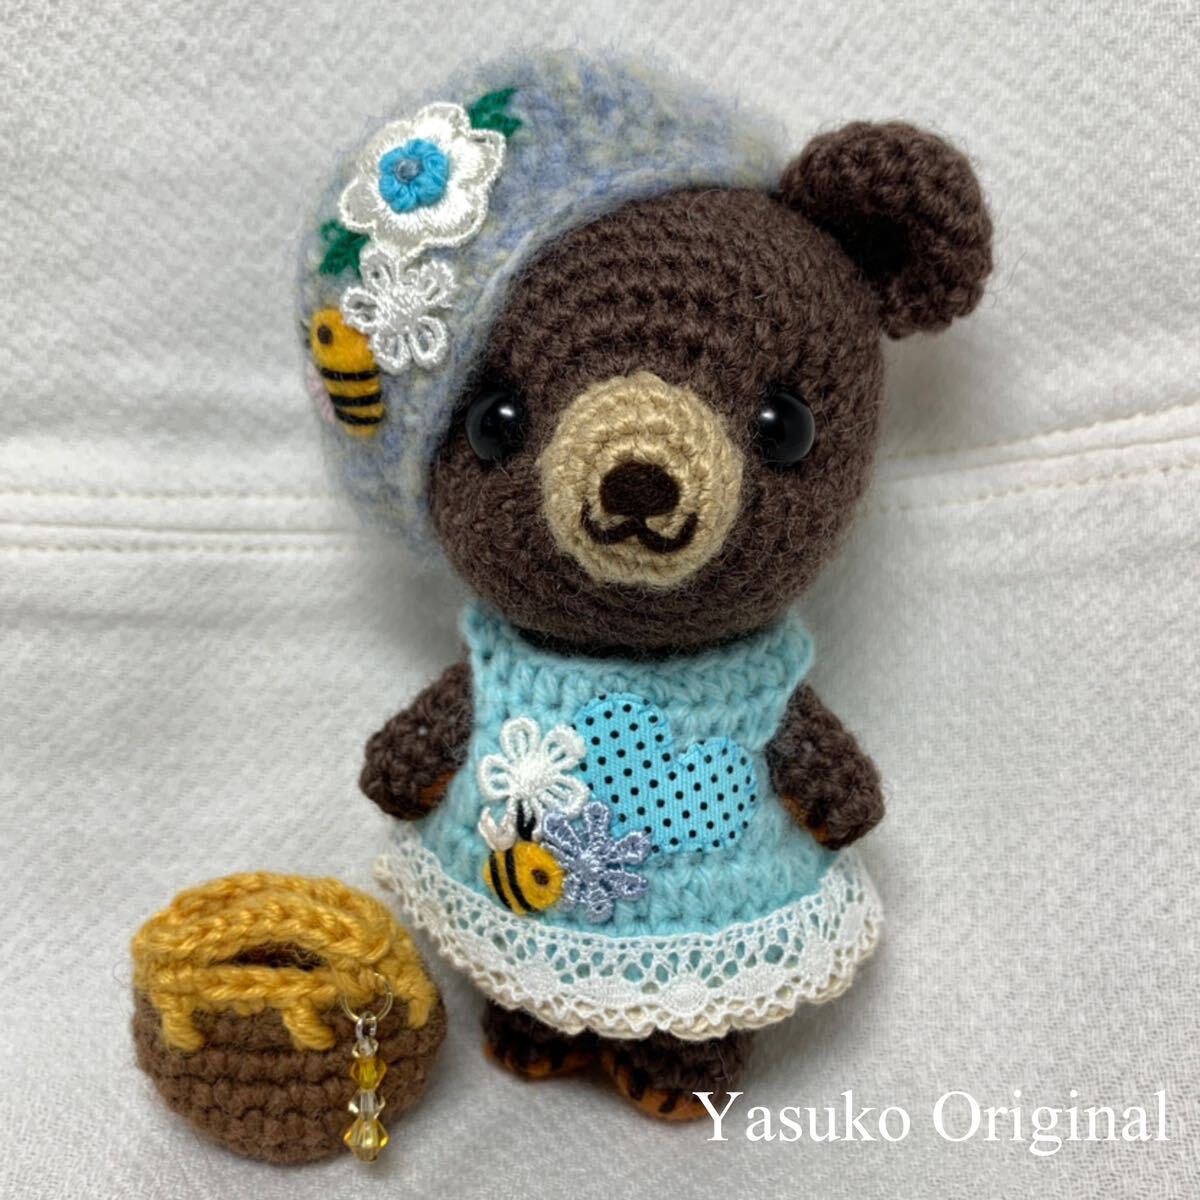 Yasuko 的 Amigurumi 商店 ◆ 熊号 3970 ◆ 小尺寸 ◆ 熊 ◆ 花和蜜蜂 ◆ Amigurumi ◆ 手工制作 ◆ 手工编织, 玩具, 游戏, 毛绒玩具, 钩针编织玩具